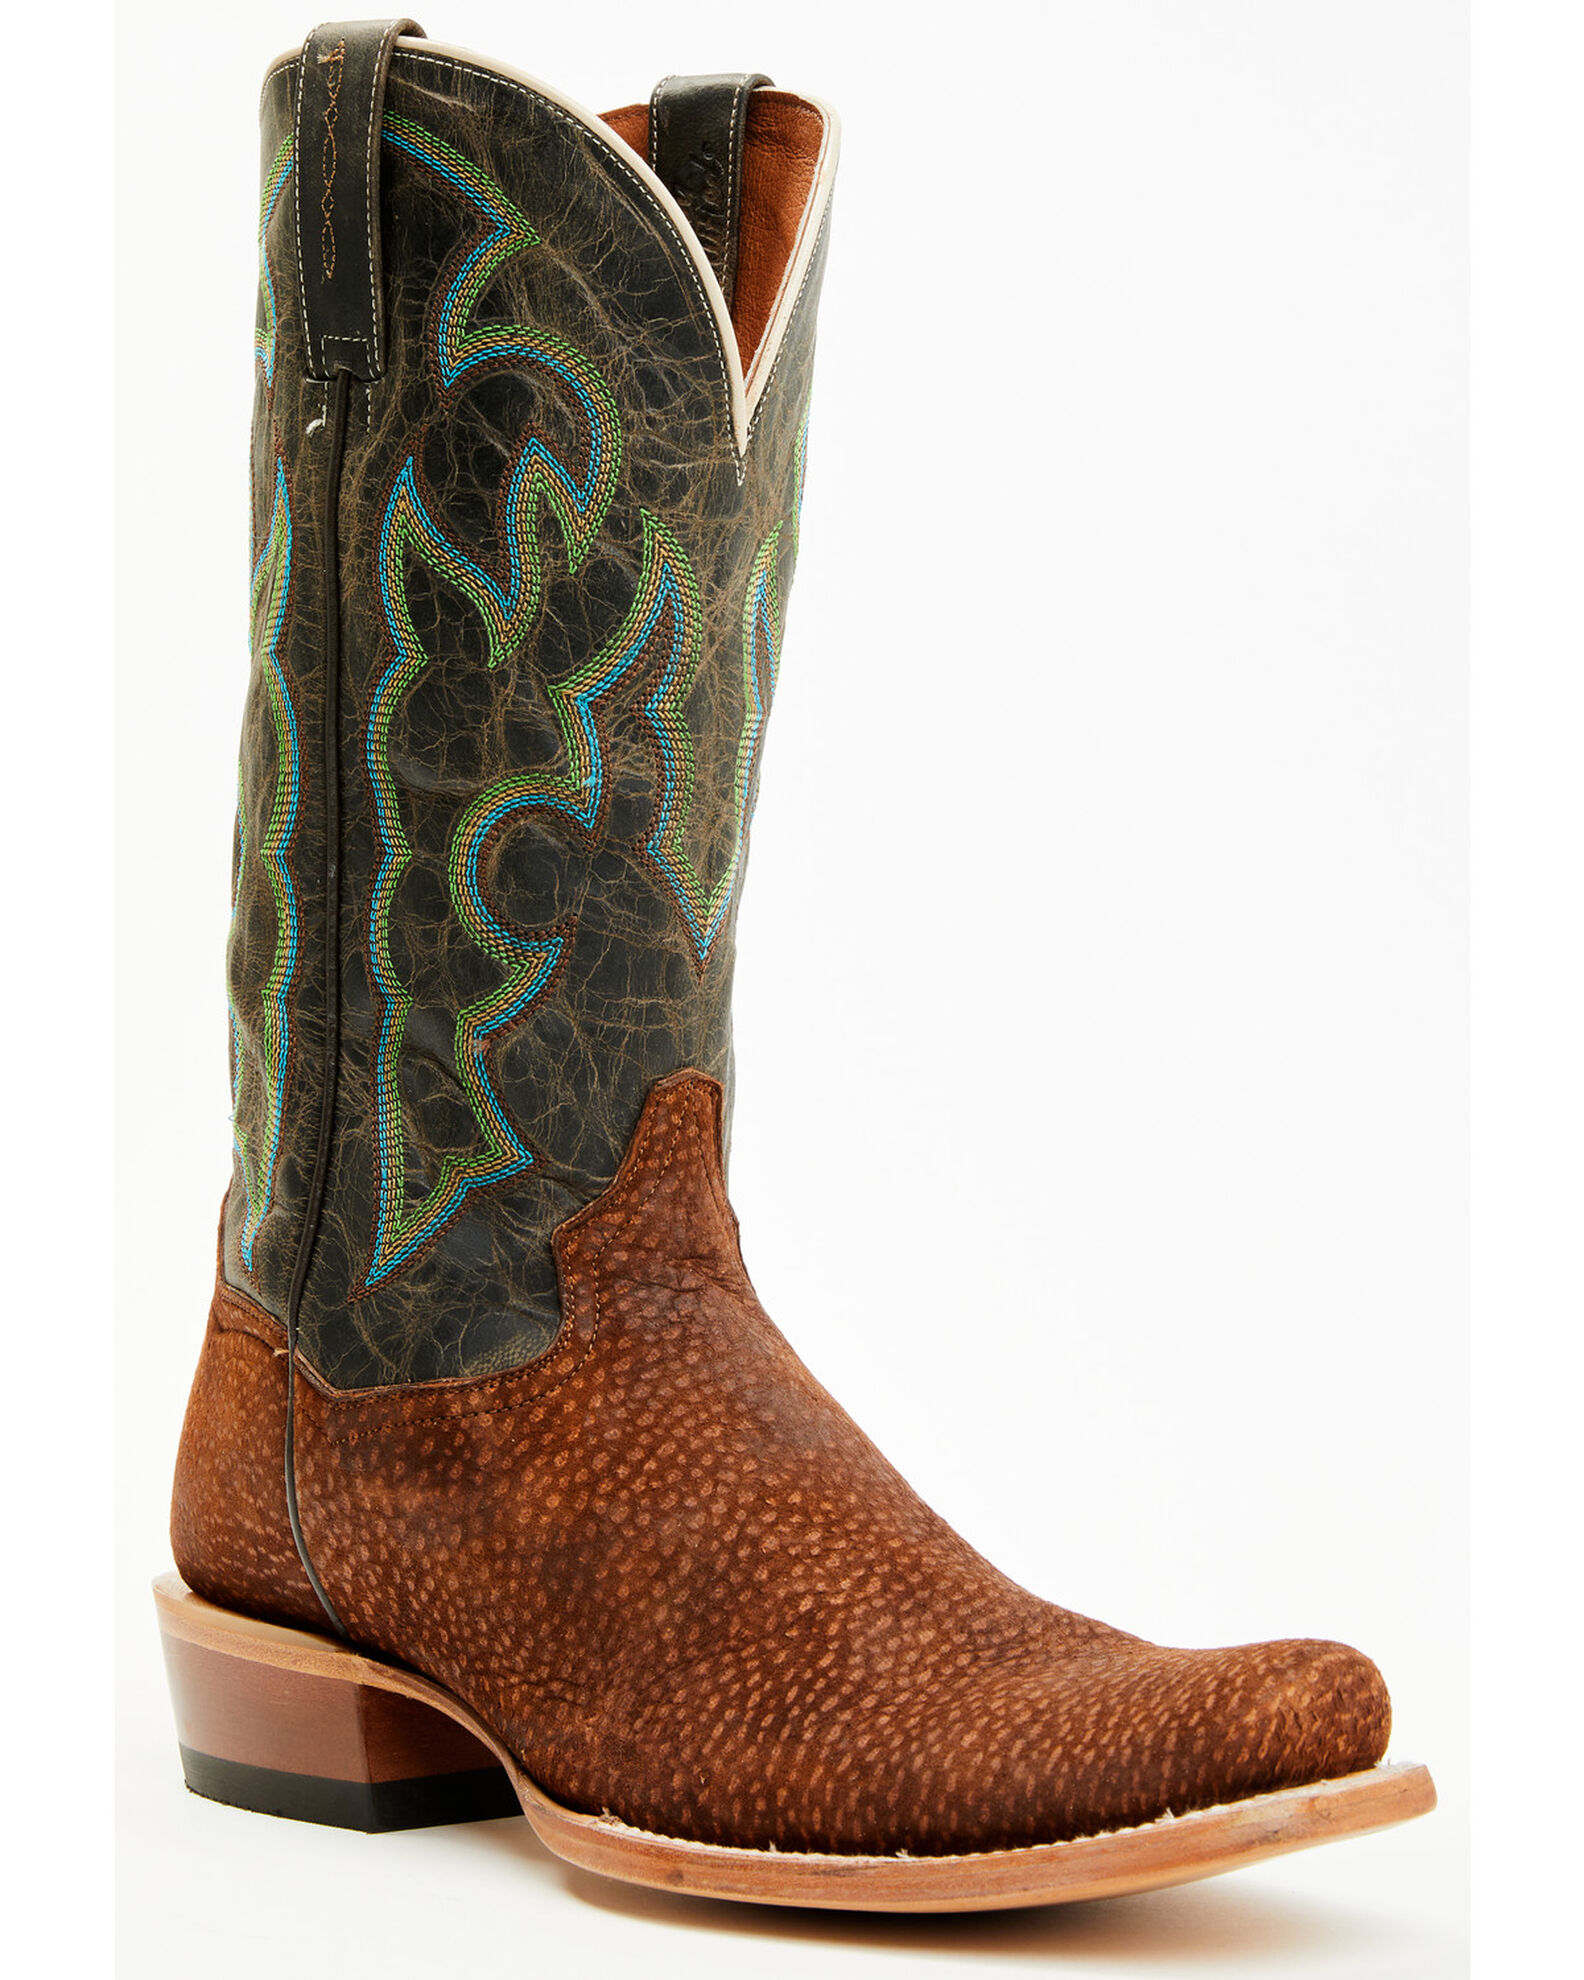 Product Name: Dan Post Men's Cappy Exotic Carpincho Western Boots ...